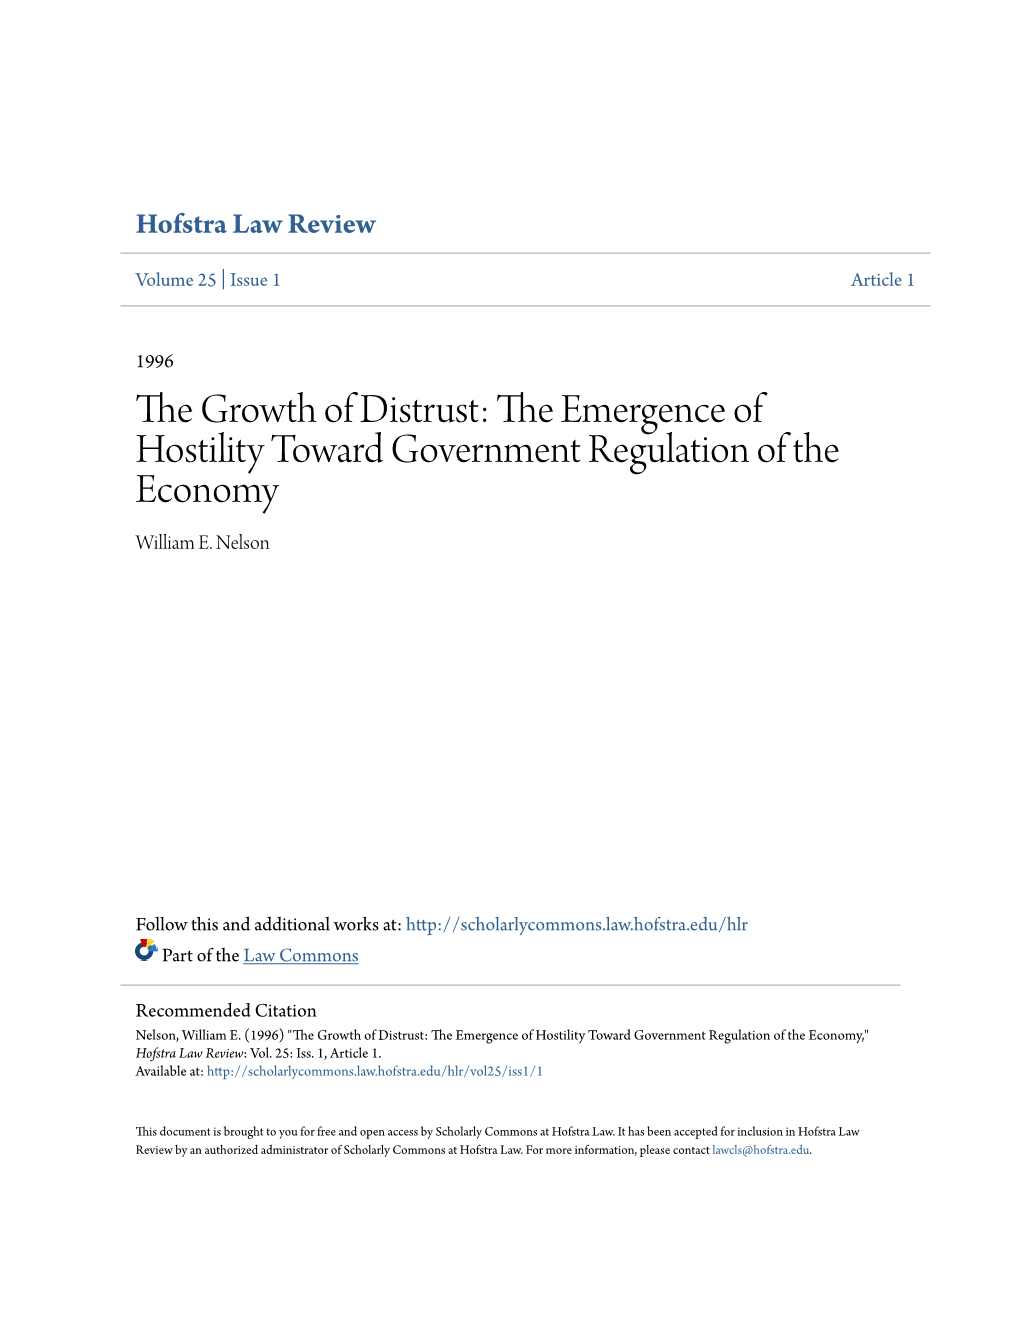 The Emergence of Hostility Toward Government Regulation of the Economy